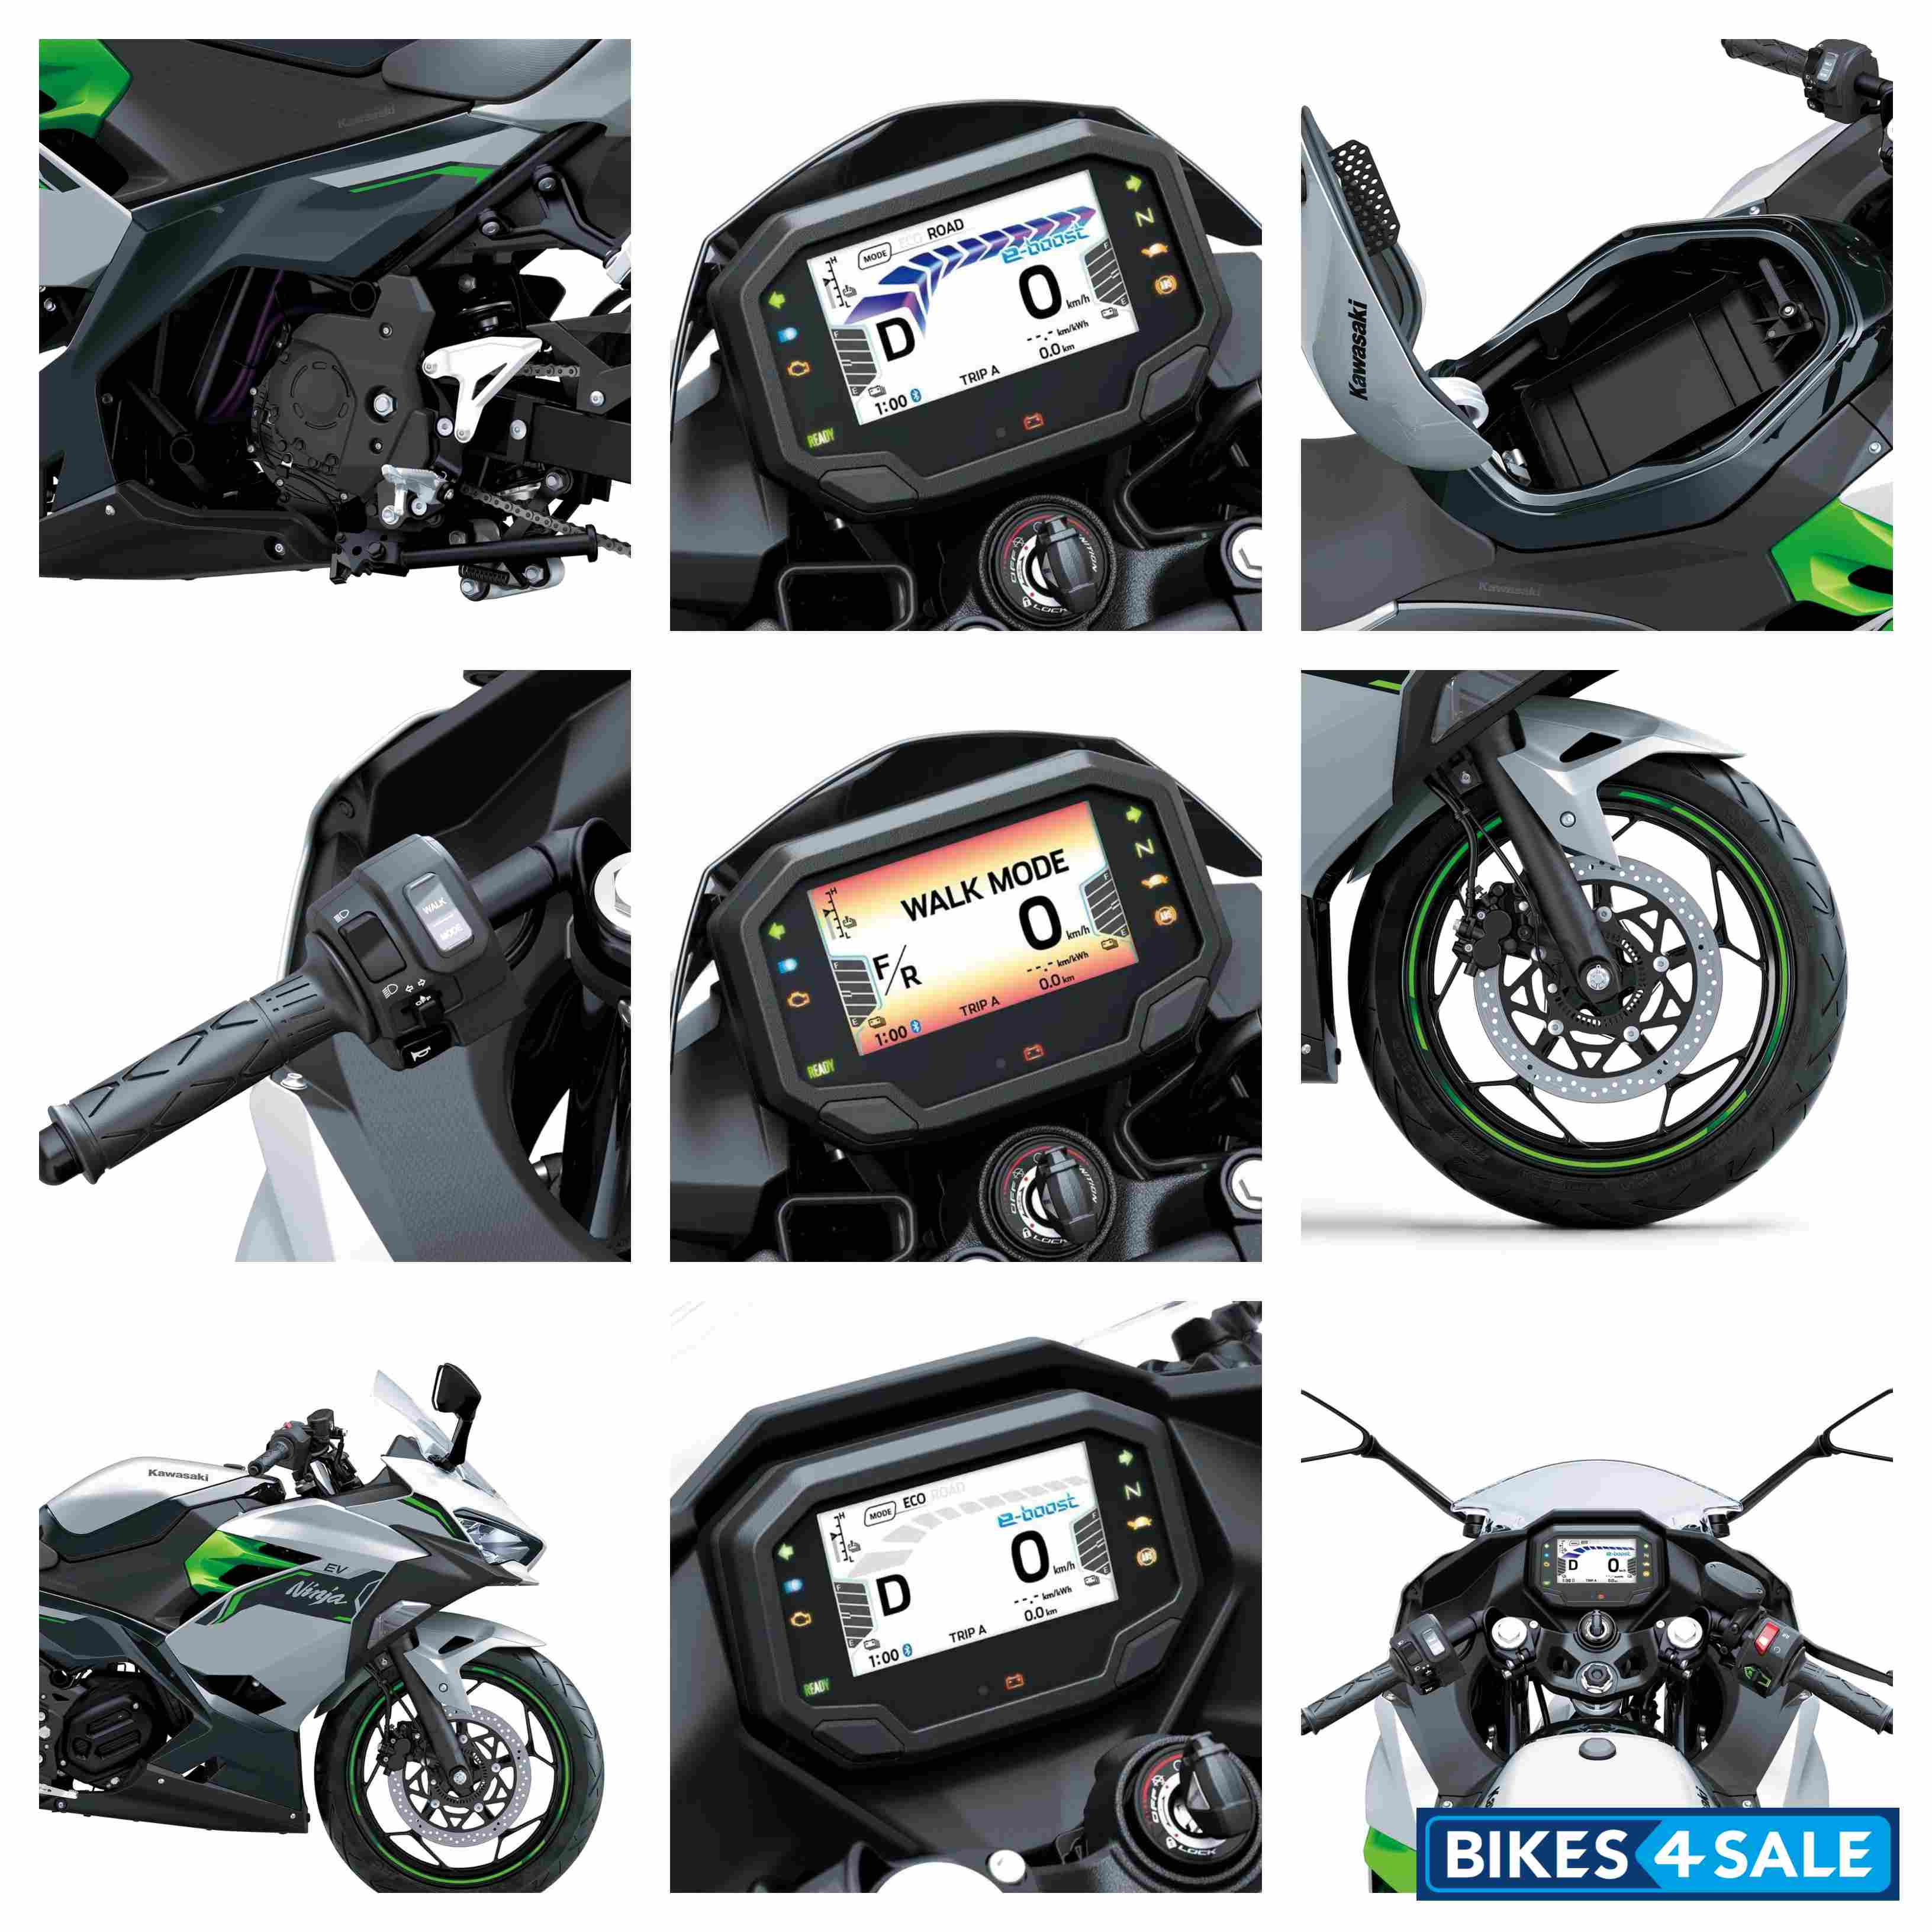 Kawasaki Ninja e-1 - Features